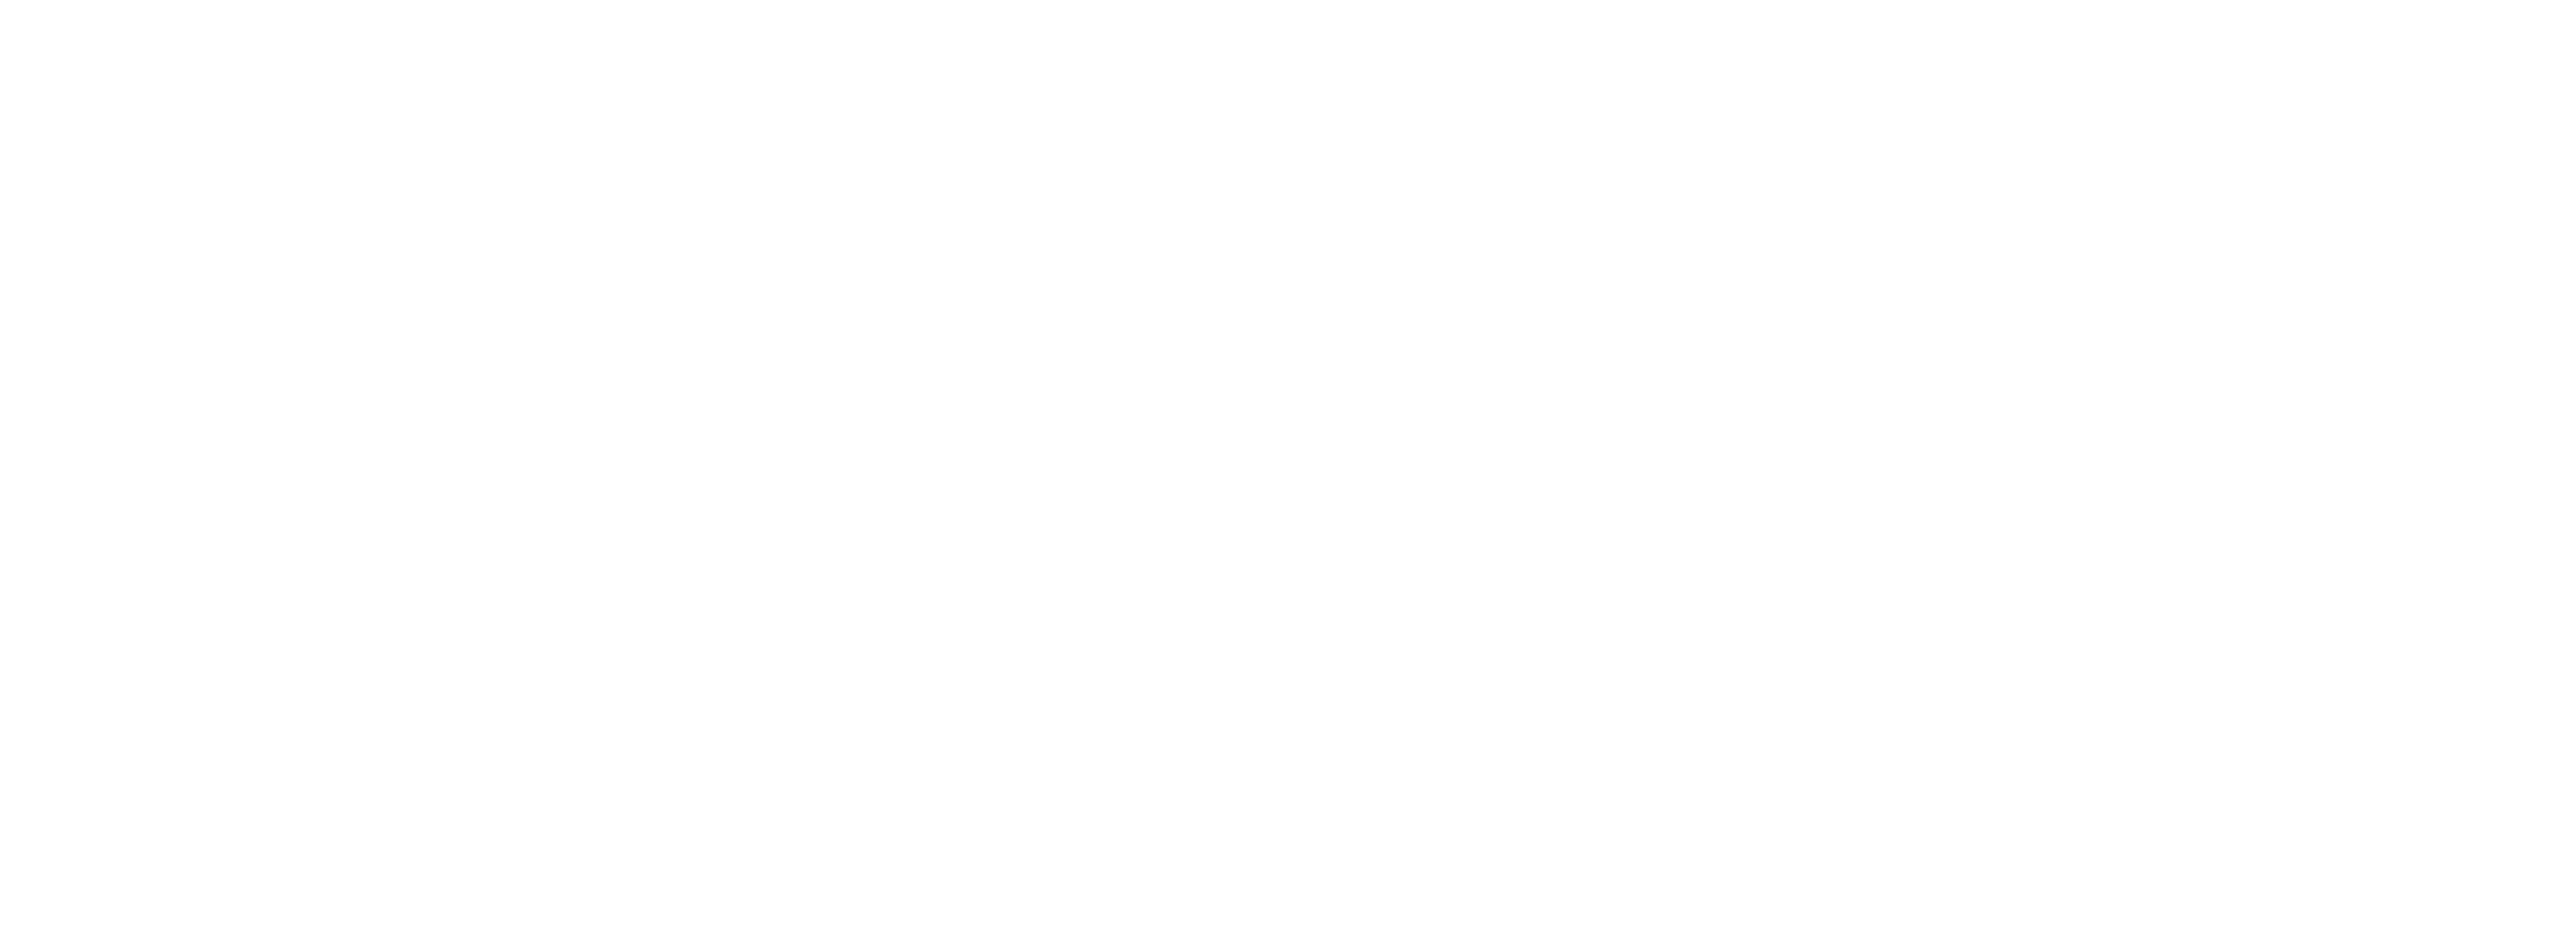 The Timber Rack